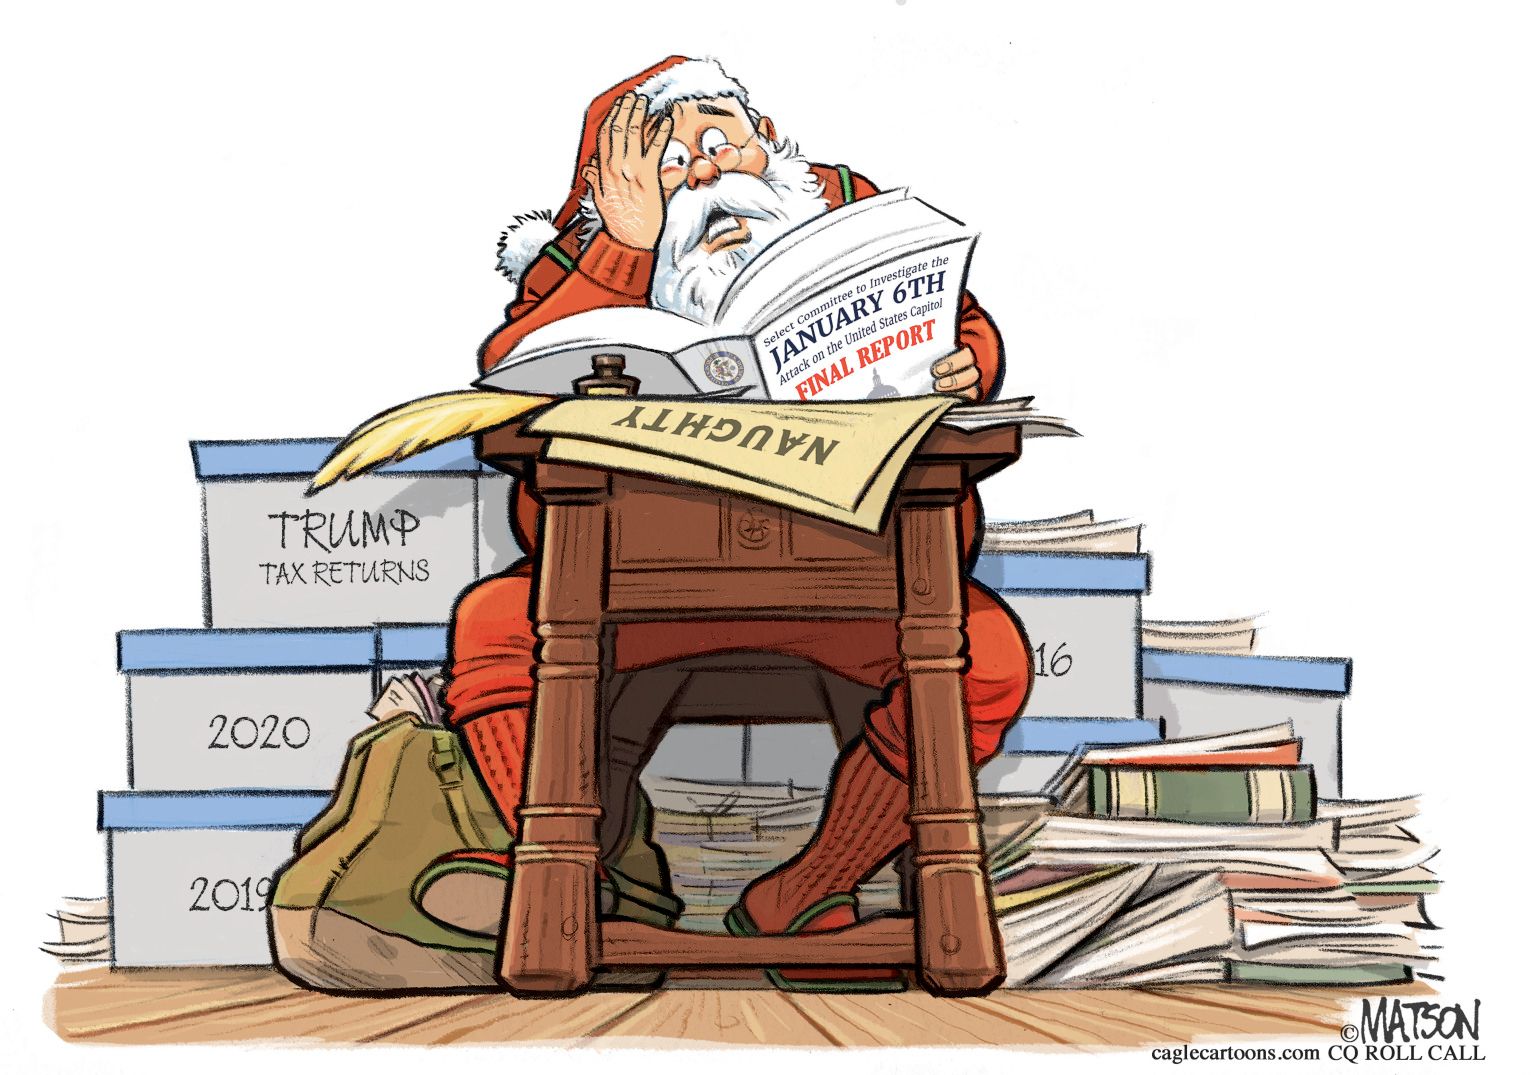 Santa Reads January 6th Committee Report - newsjustin.press editorial political cartoon